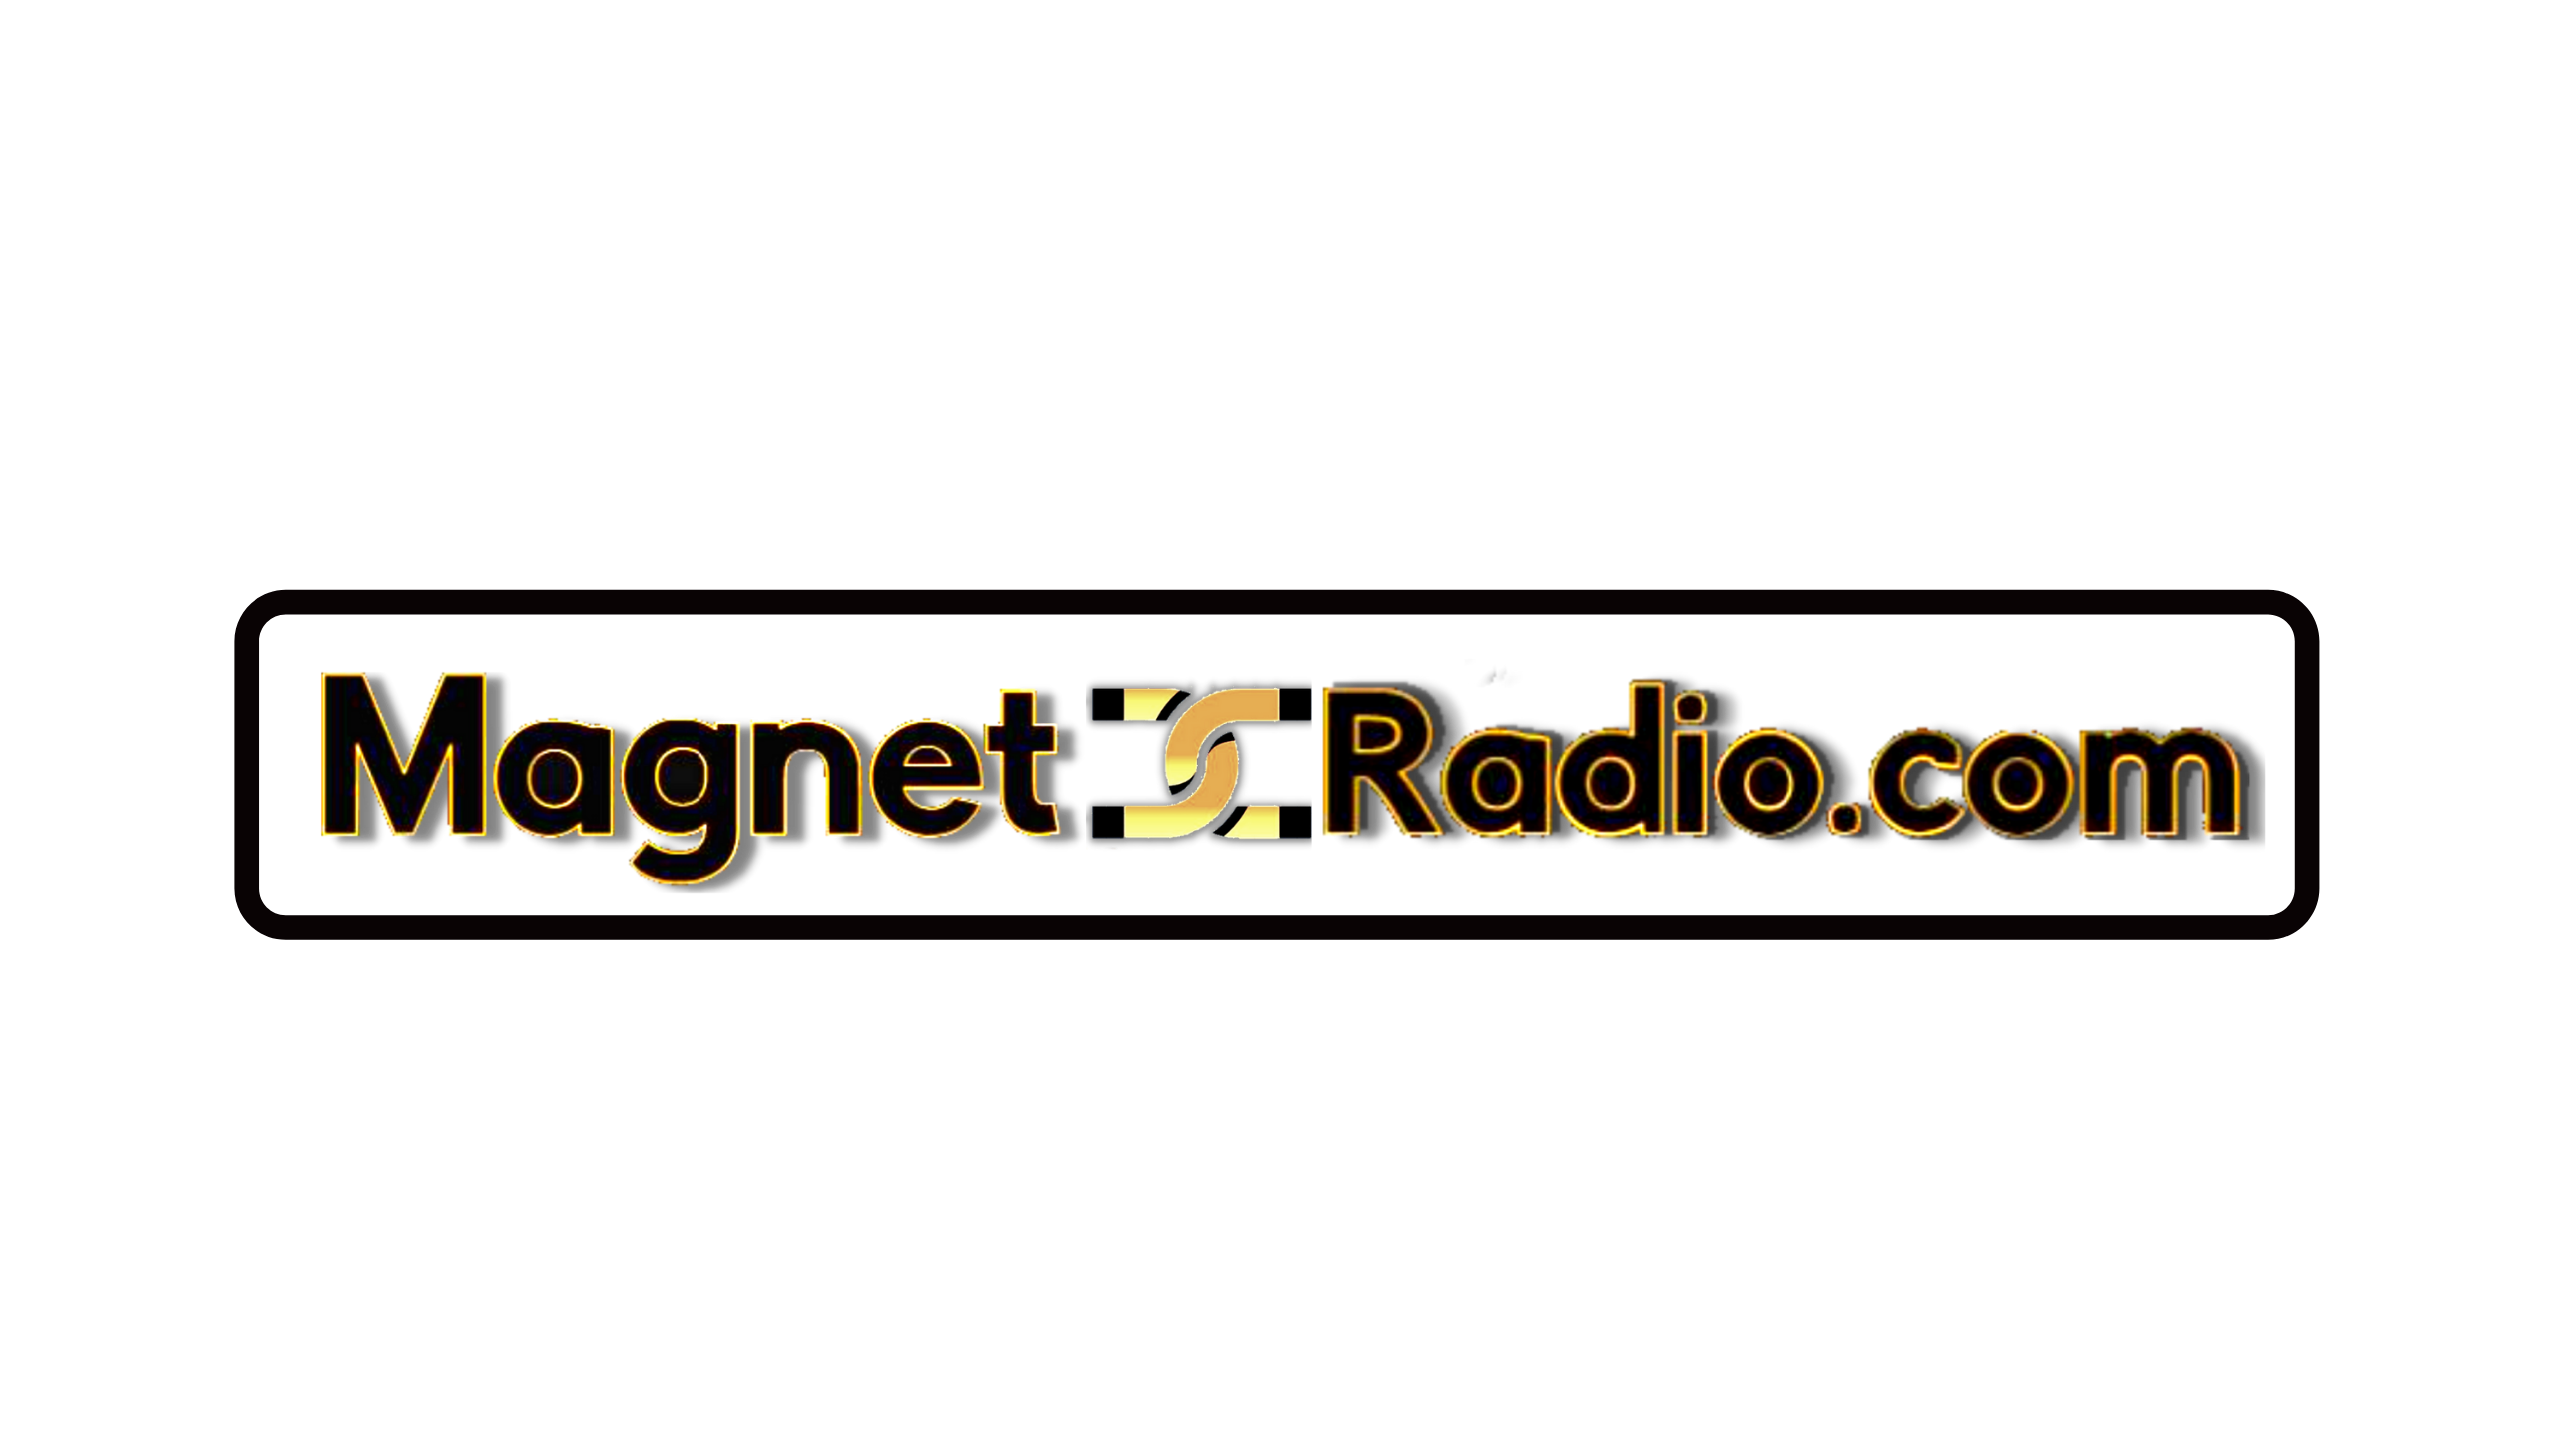 Magnet-radio.com